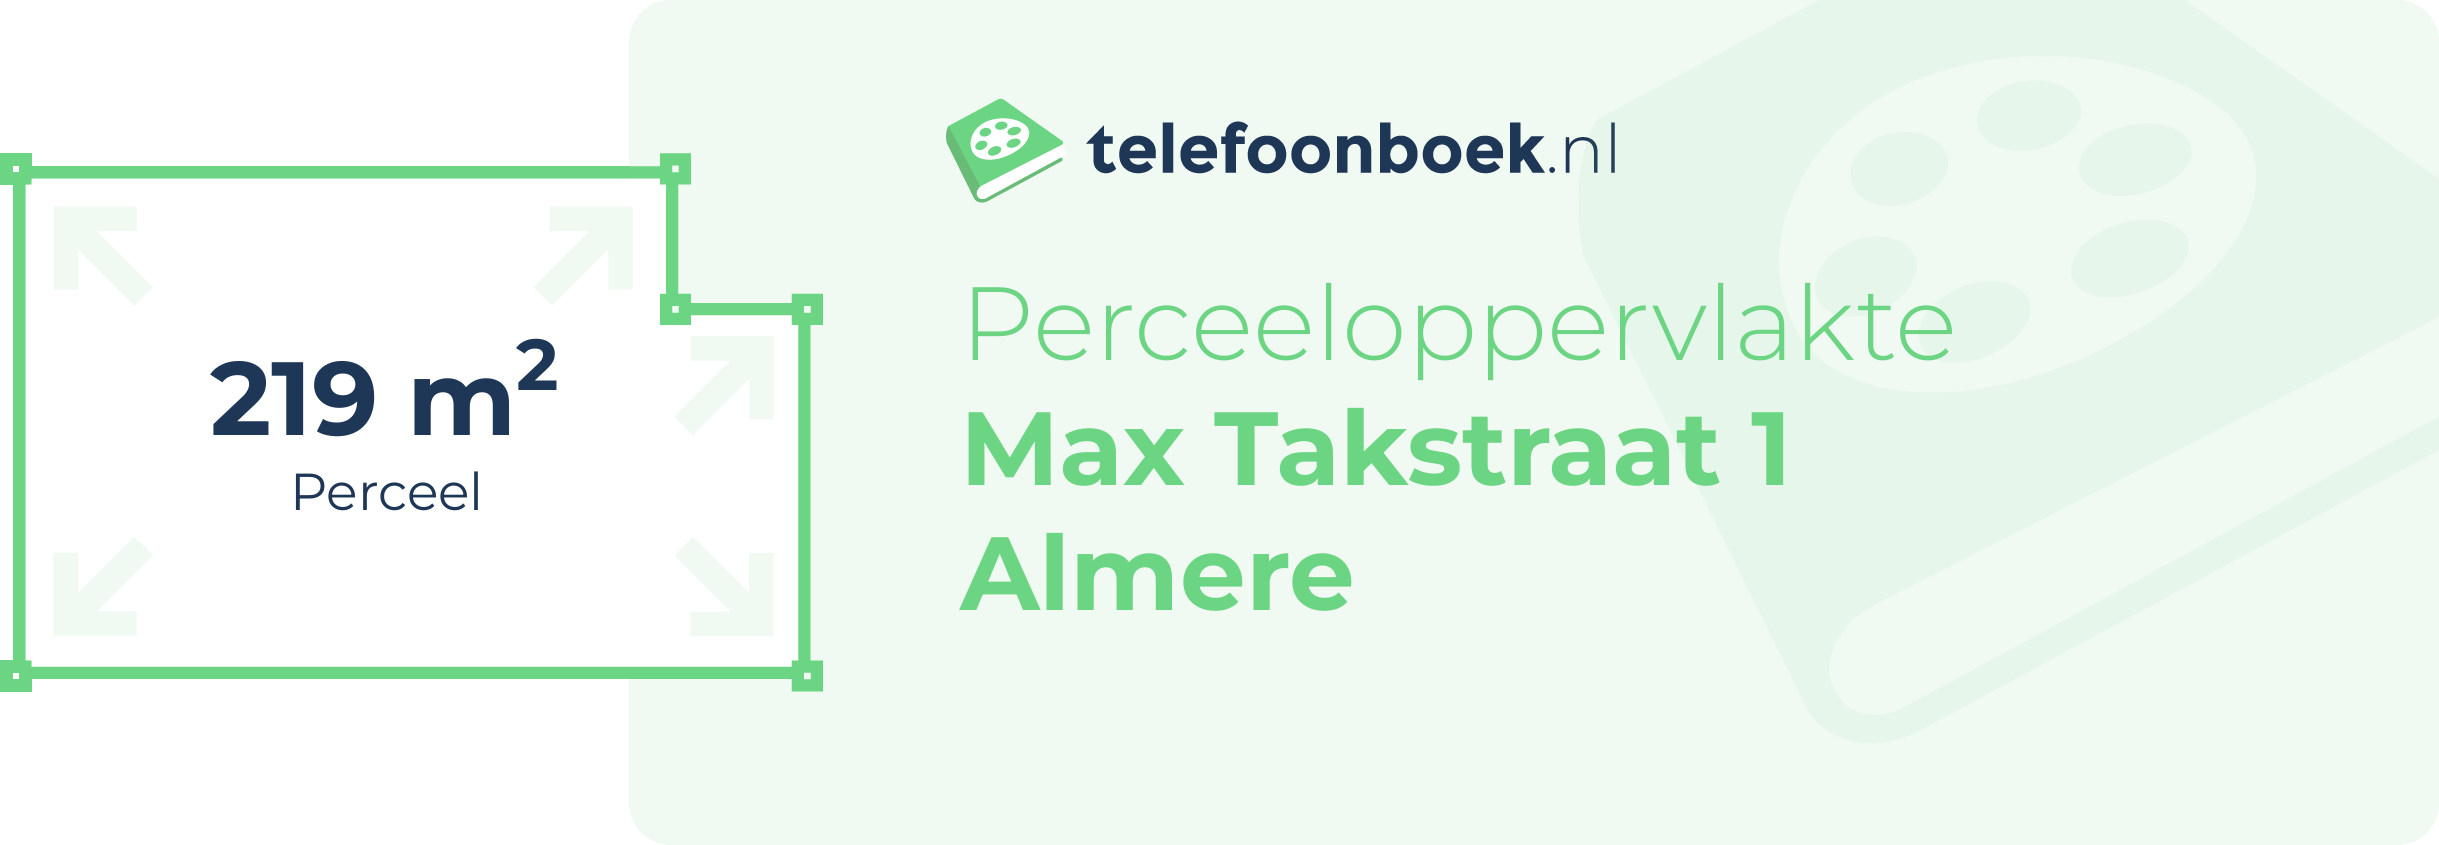 Perceeloppervlakte Max Takstraat 1 Almere